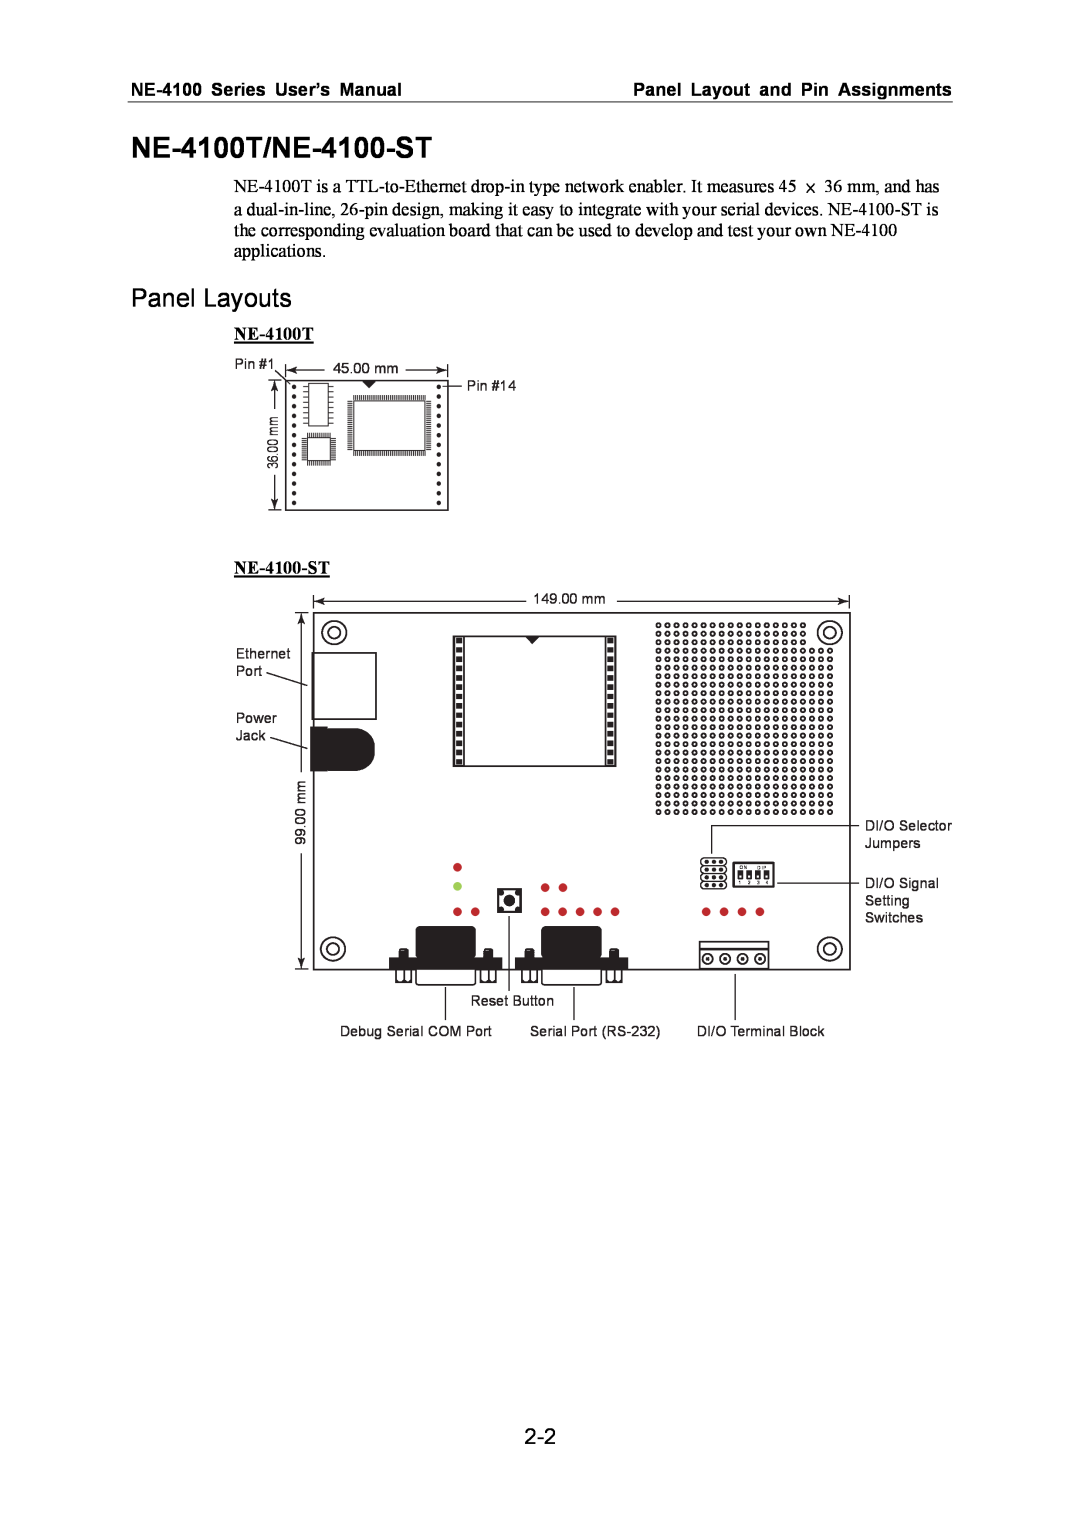 Moxa Technologies NE-4100T/NE-4100-ST, Panel Layouts, NE-4100 Series User’s Manual, Panel Layout and Pin Assignments 